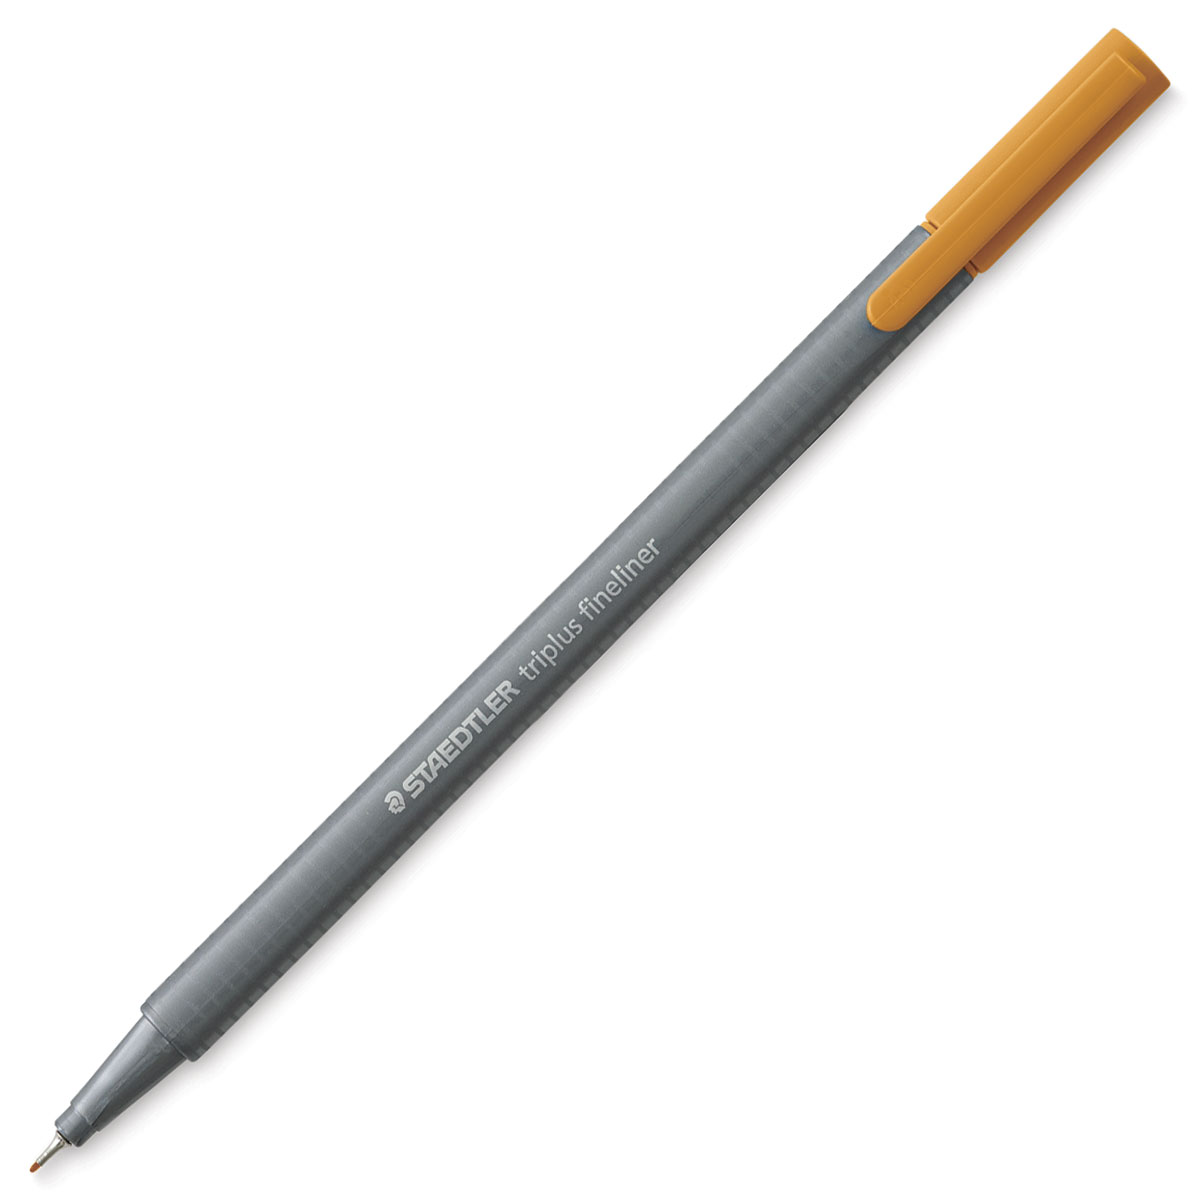 Staedtler Triplus Fineliner Pen - Light Gray